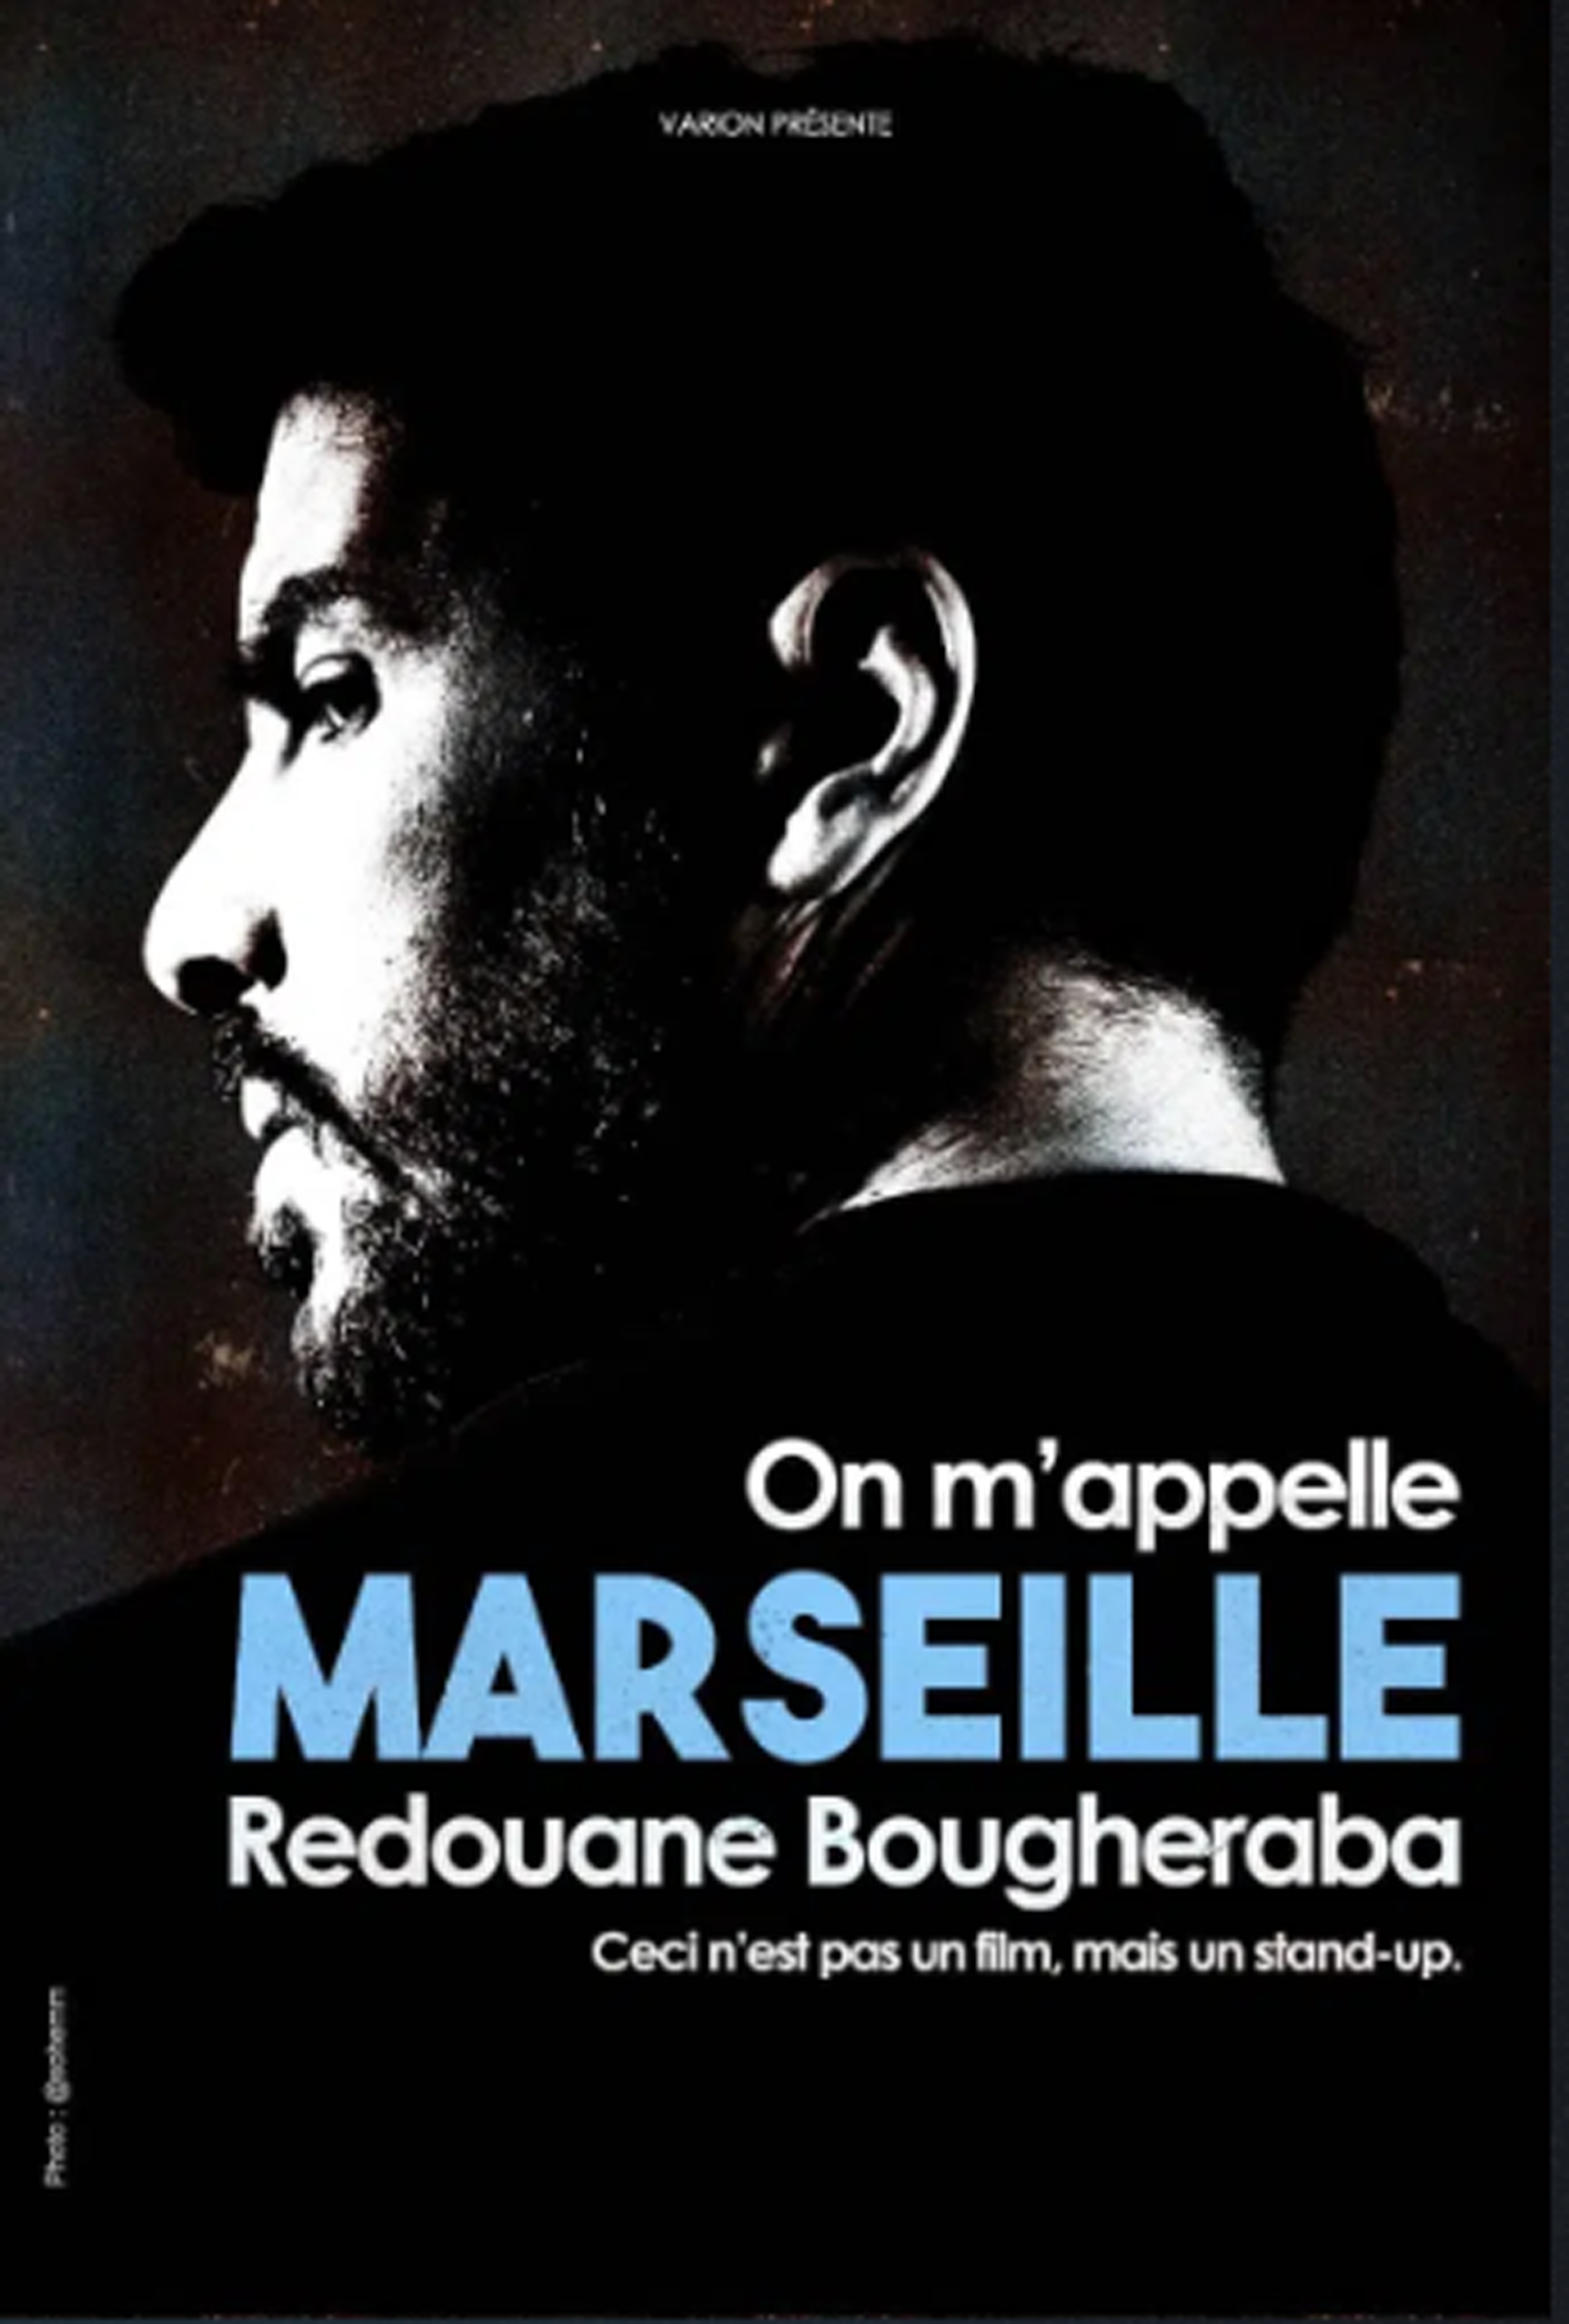 Redouane Bougheraba - On m'appelle Marseille : Zénith d'Auvergne